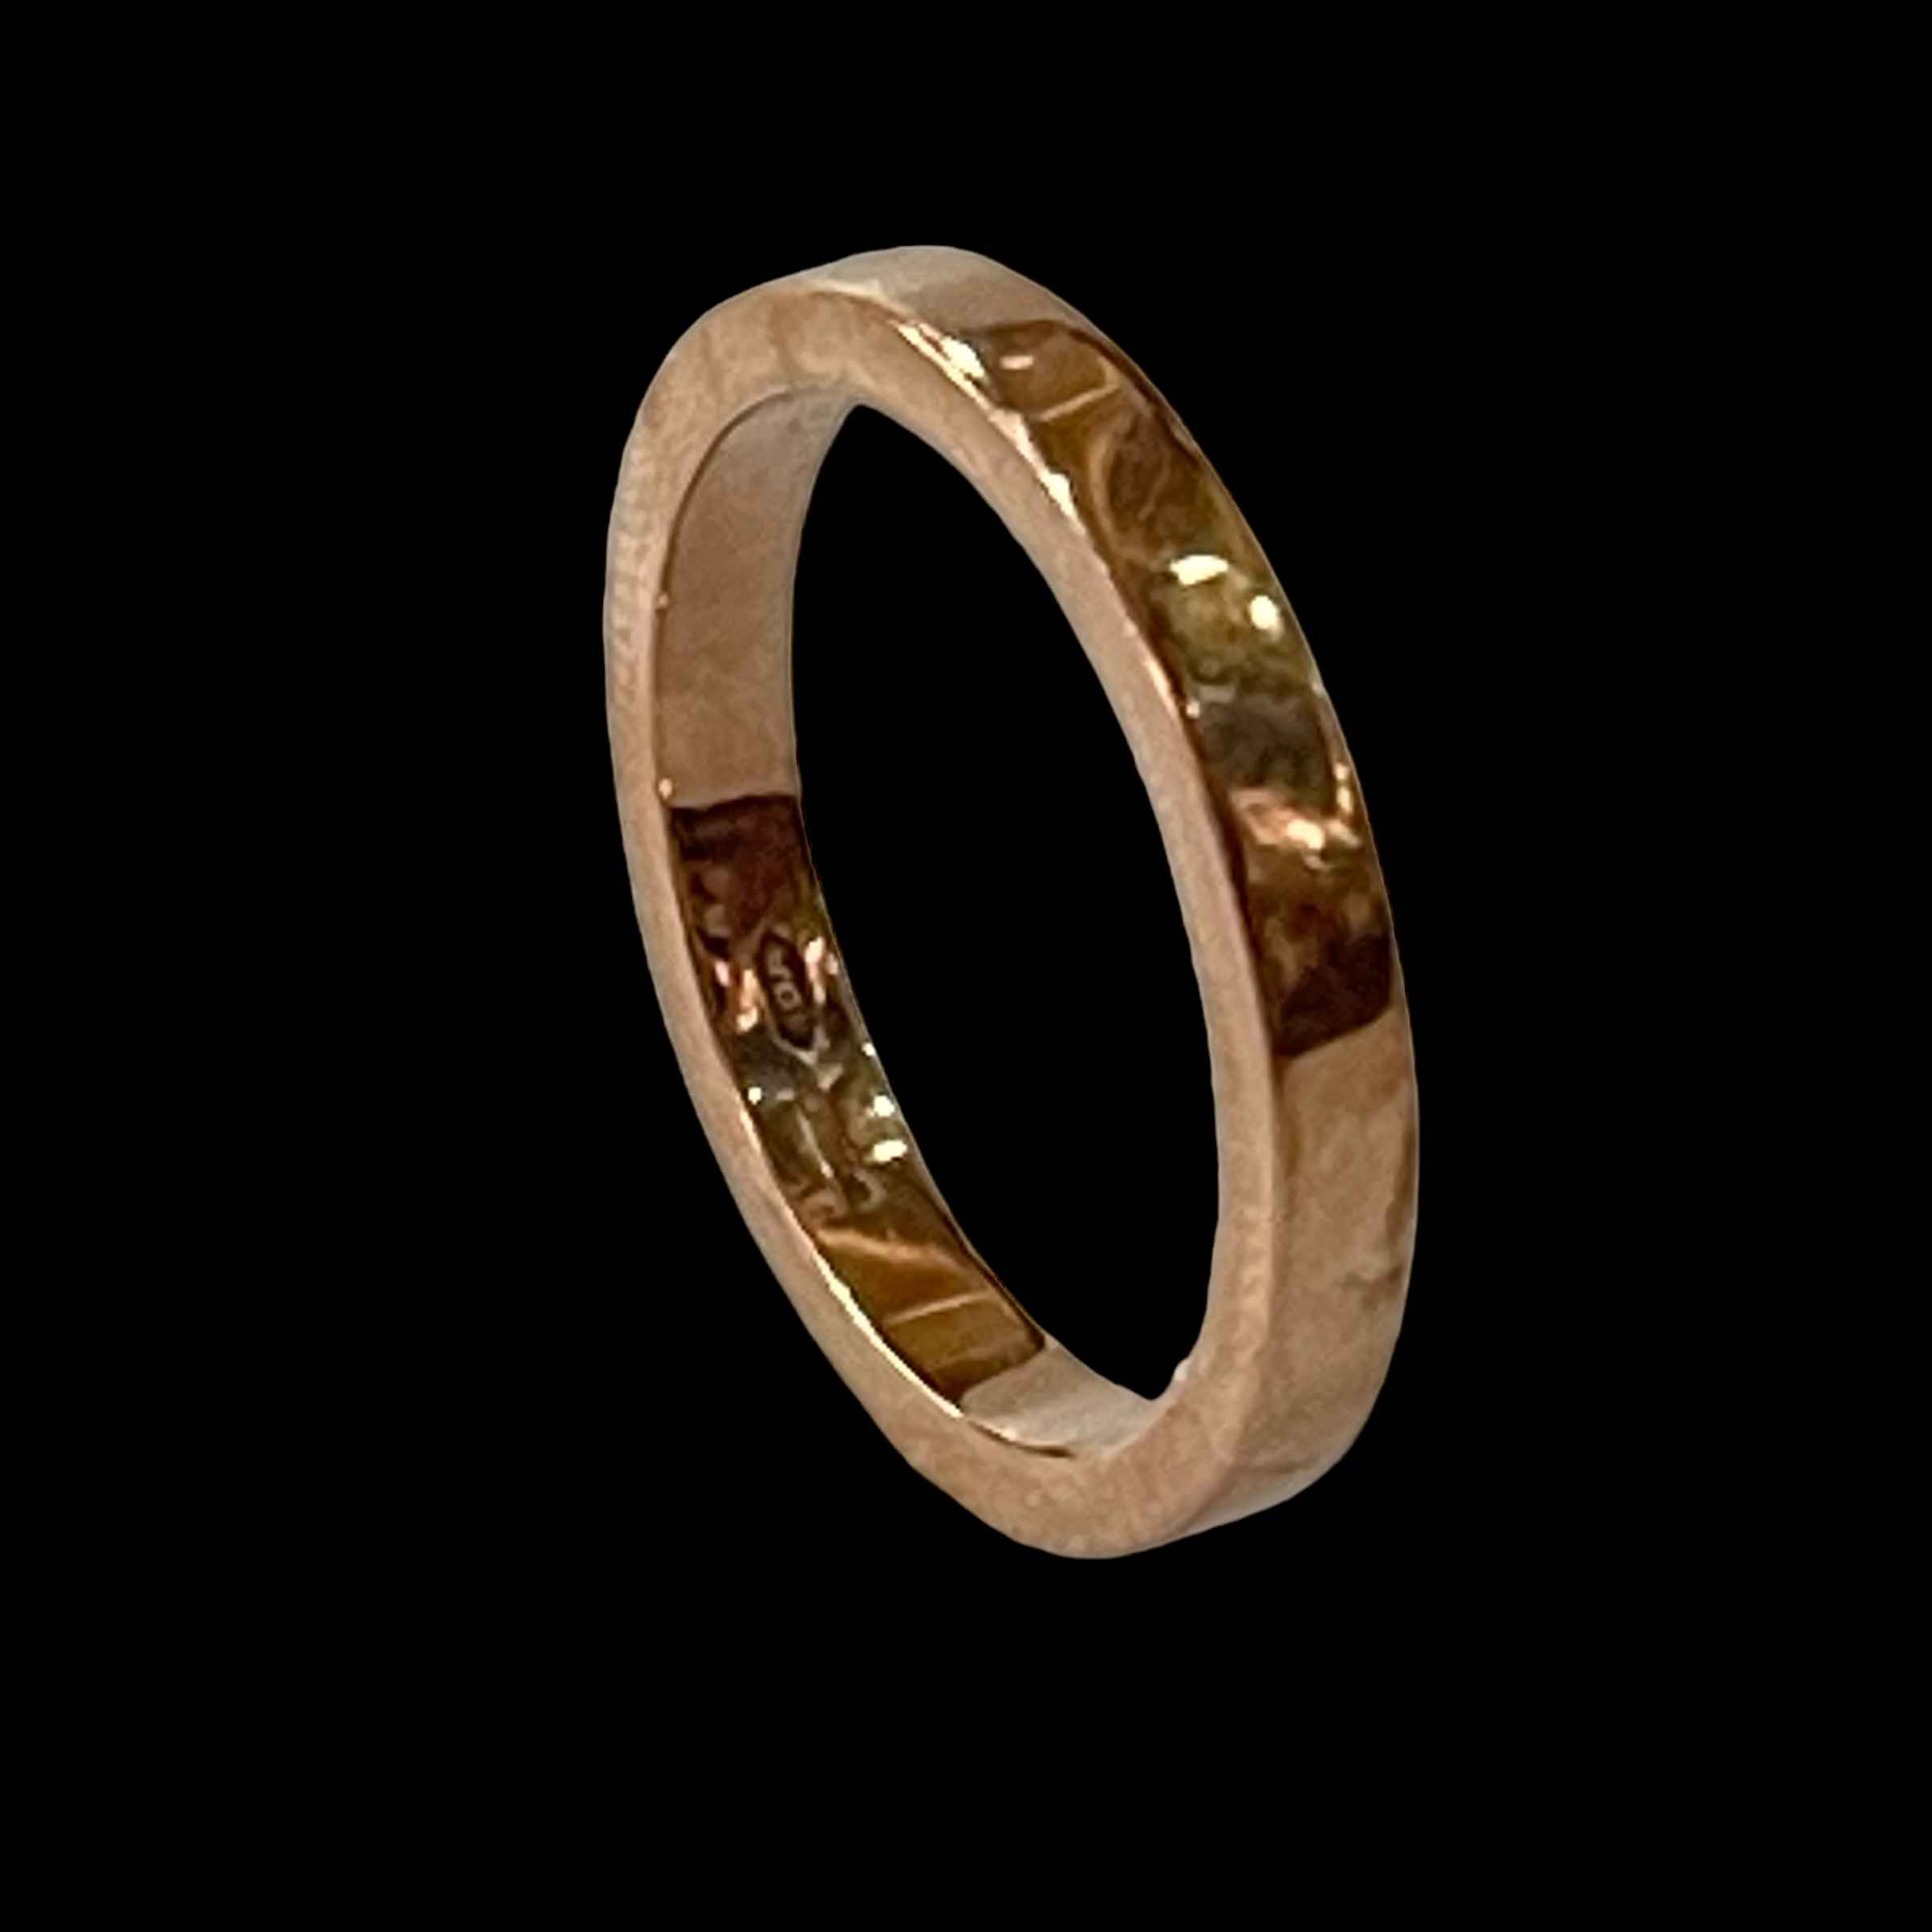 9 carat gold wedding band, size Q.